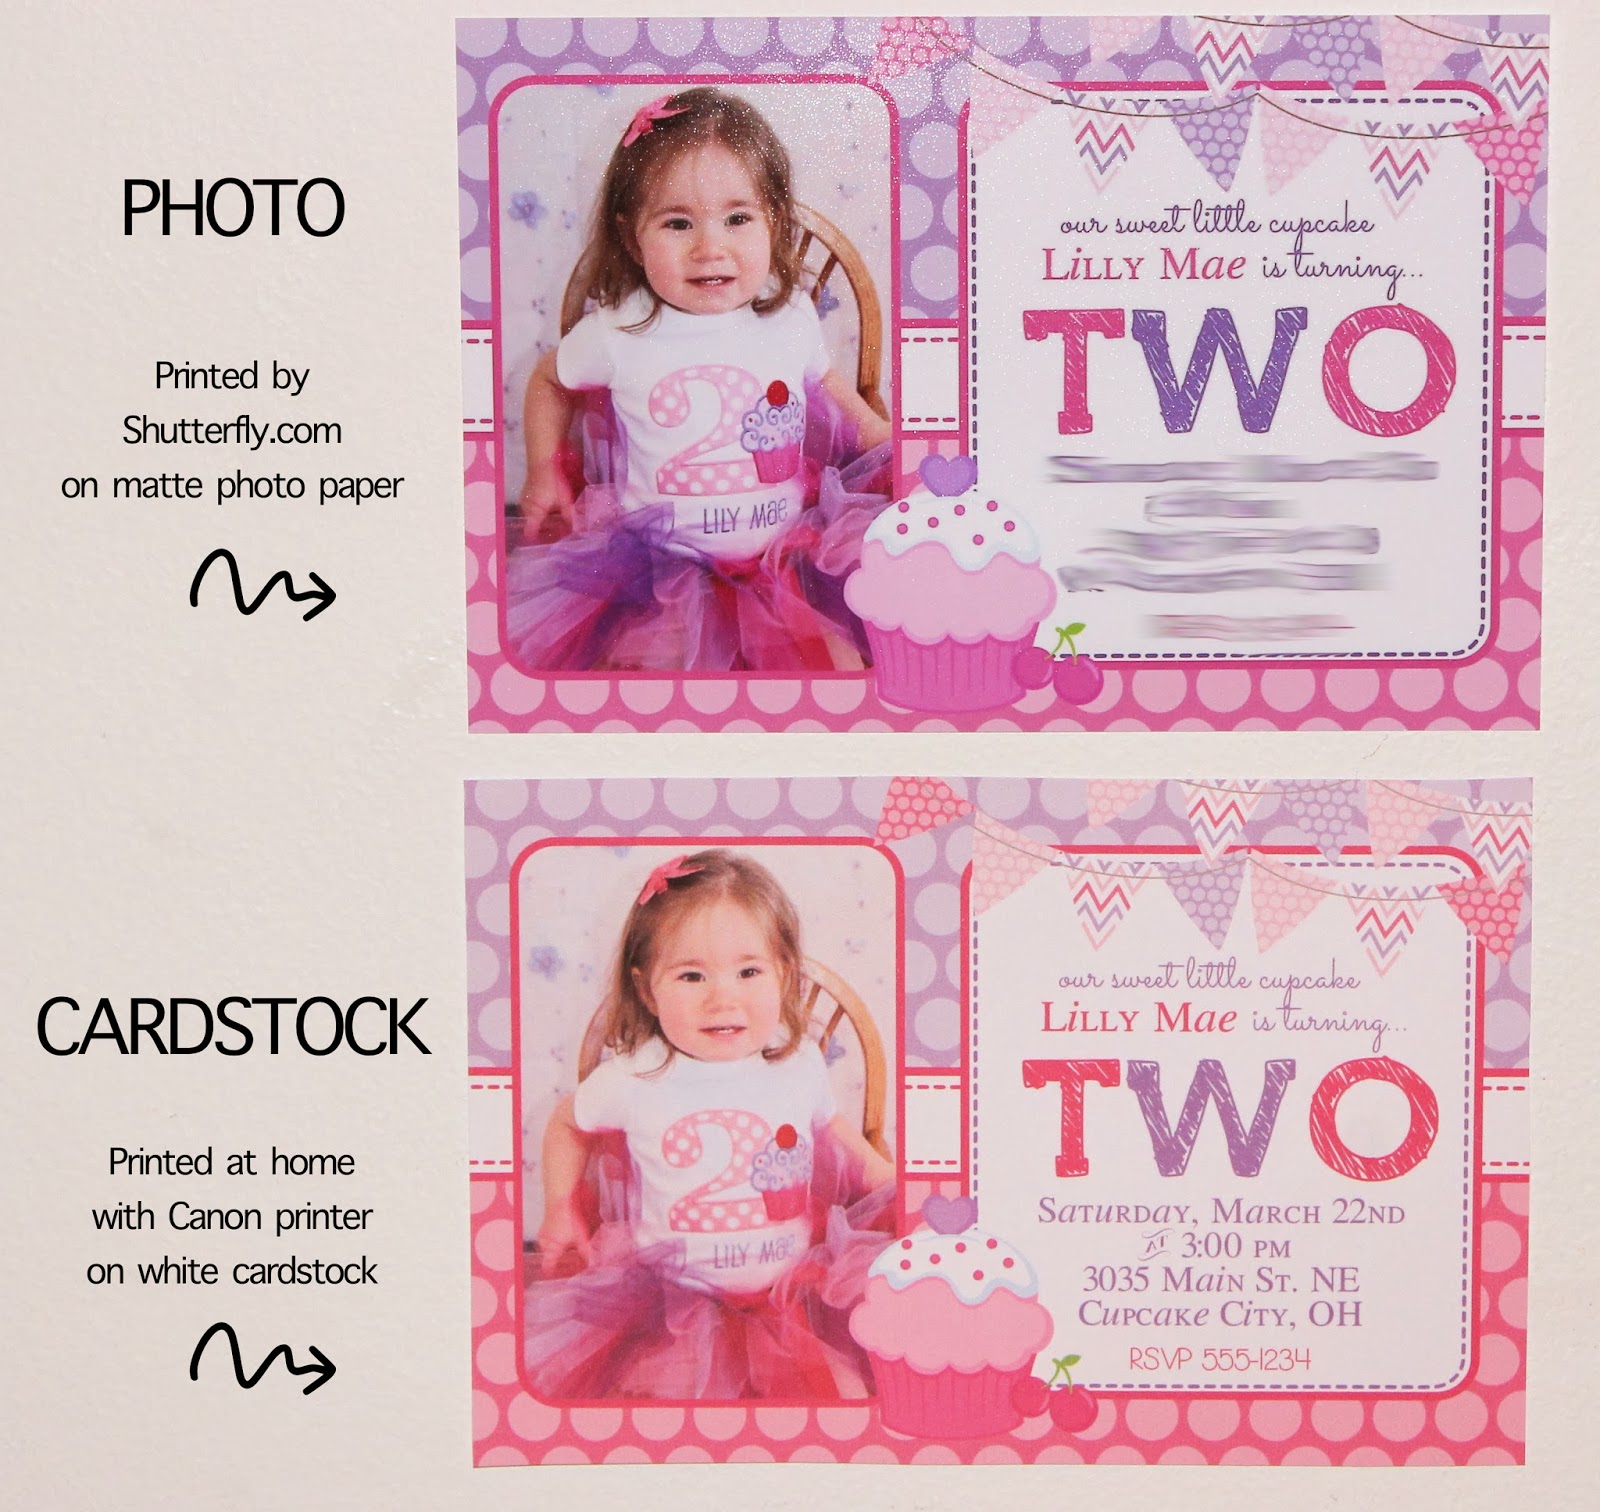 printable-invitations-cardstock-or-photo-paper-amista-baker